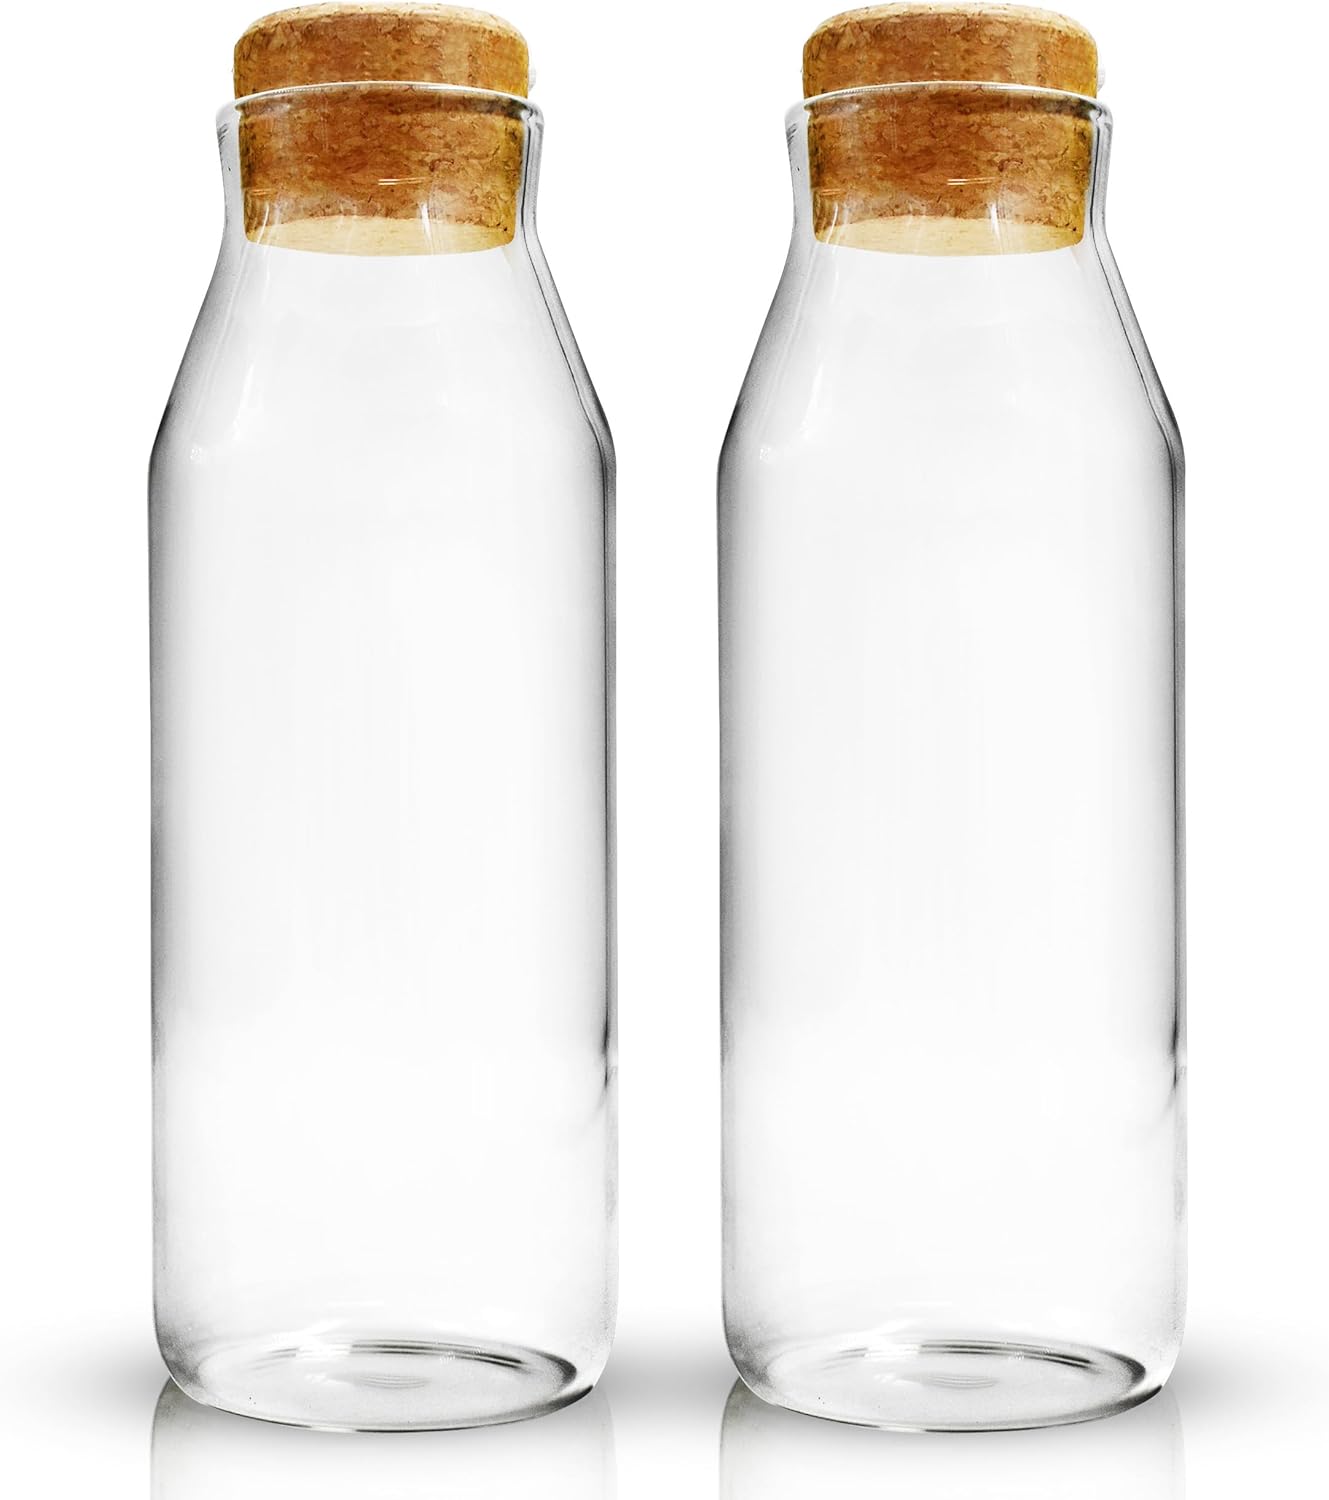 Water Carafe - 1000ml Glass Carafe with Lid - Glass Water Bottle with Cork Lid - Bedside Water Carafe for Cold Drink, Milk, Juice Jars - Versatile Glass Bottles for Detergent Storage